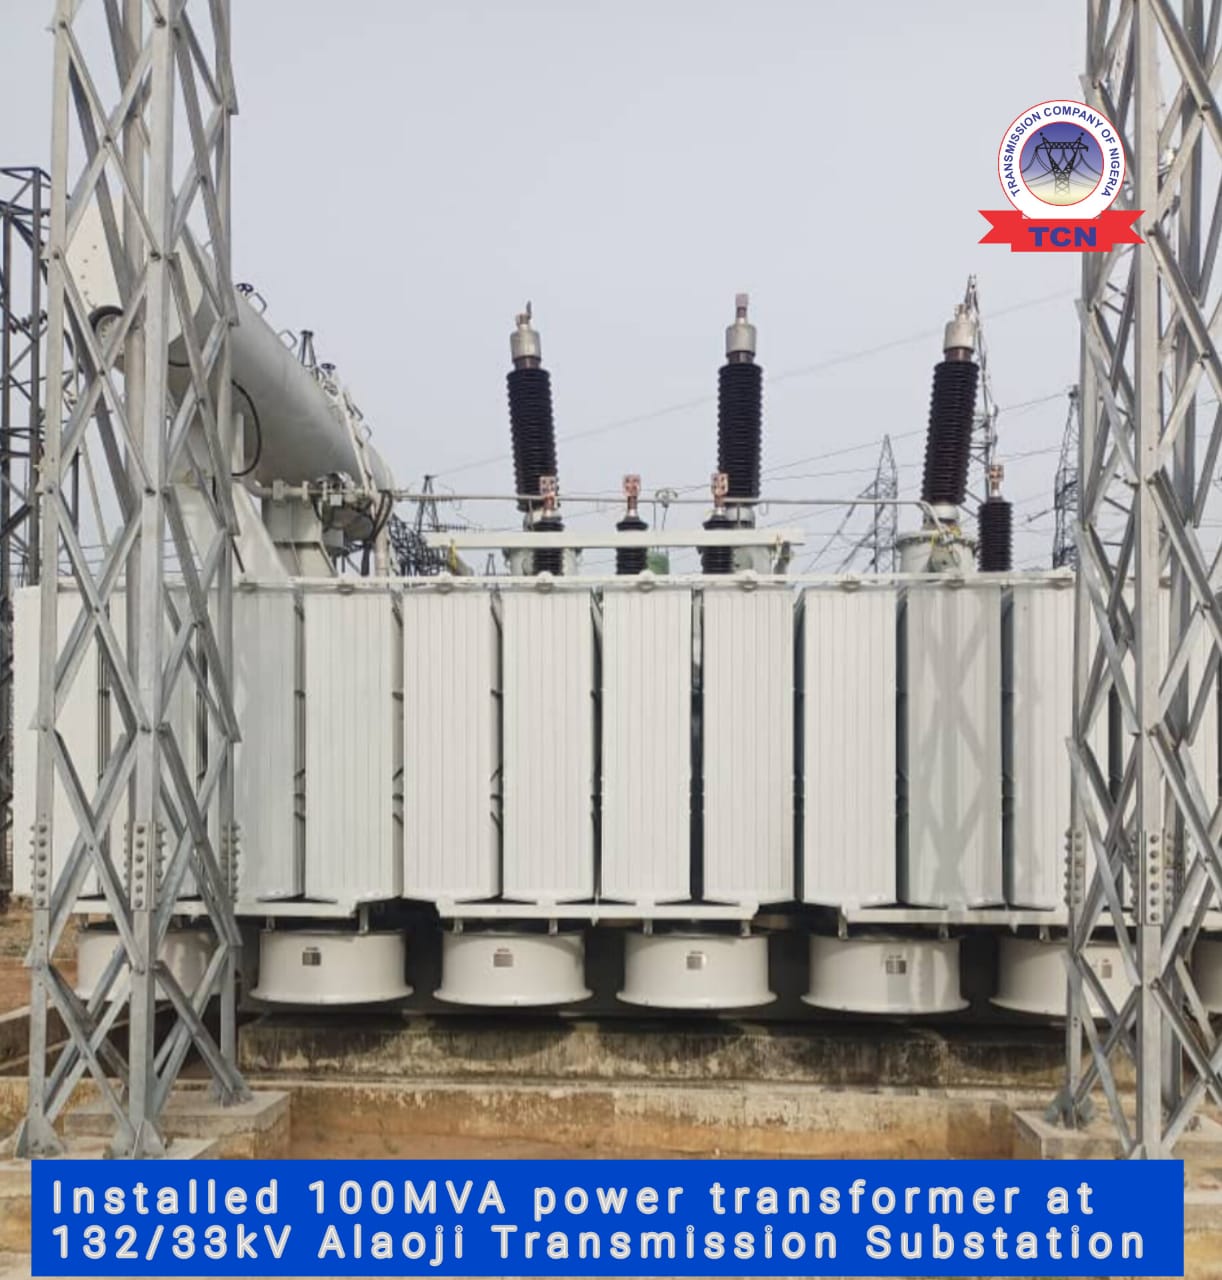 TCN Expands Regional Capacity, Increases Capacity of Port Harcourt Main Substation with 100MVA Transformer